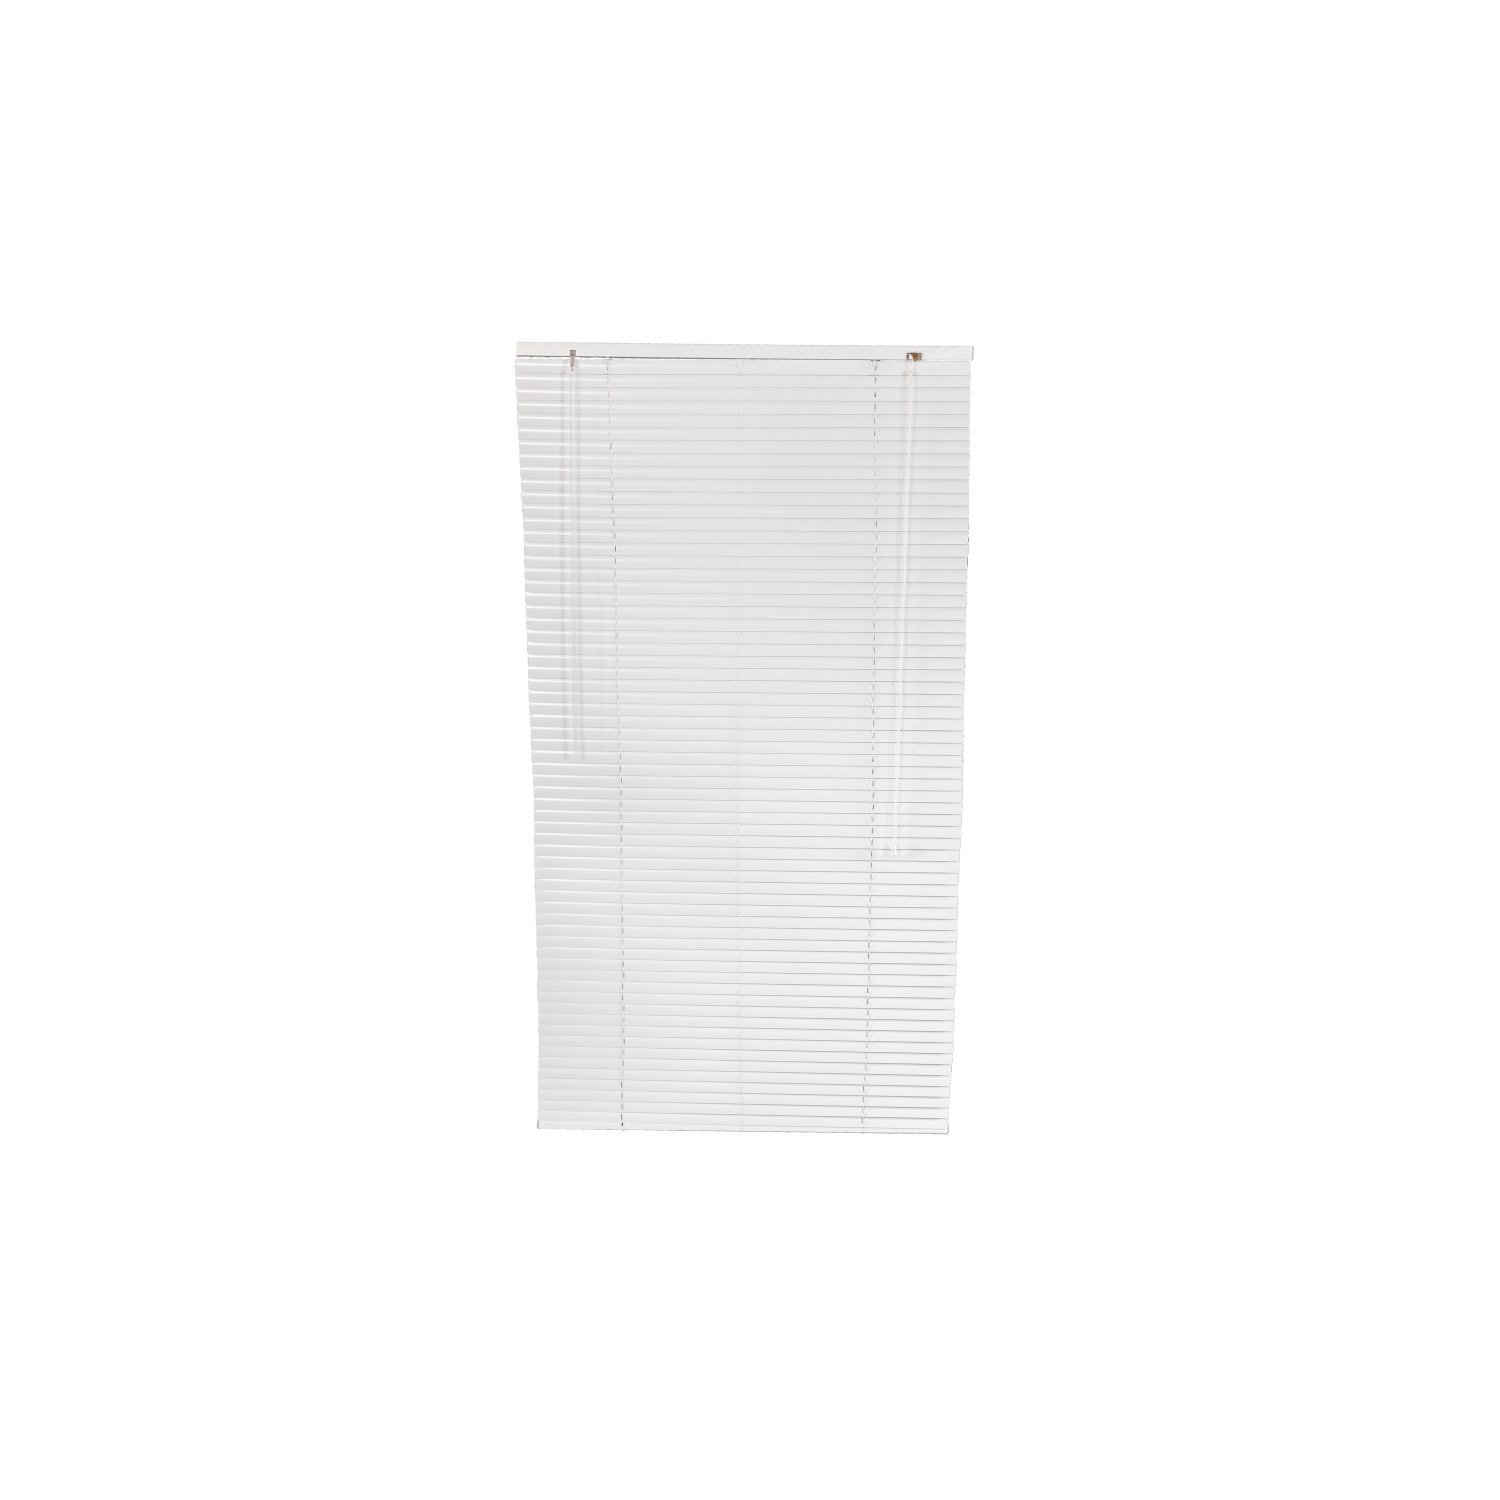 80 x 150cm Aluminium White Home Office Venetian Window Blinds with Fixings